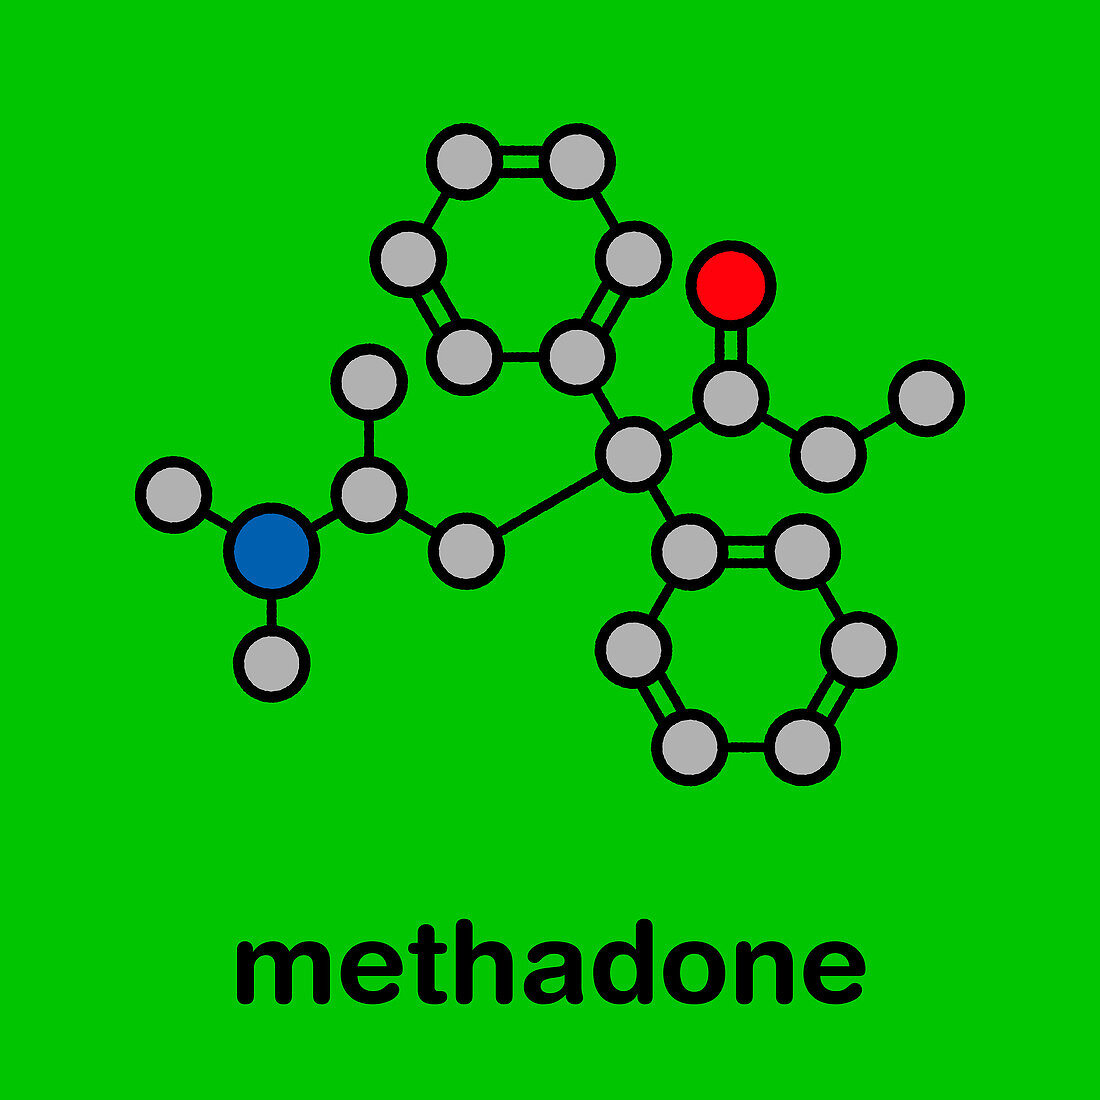 Methadone opioid dependency drug, molecular model